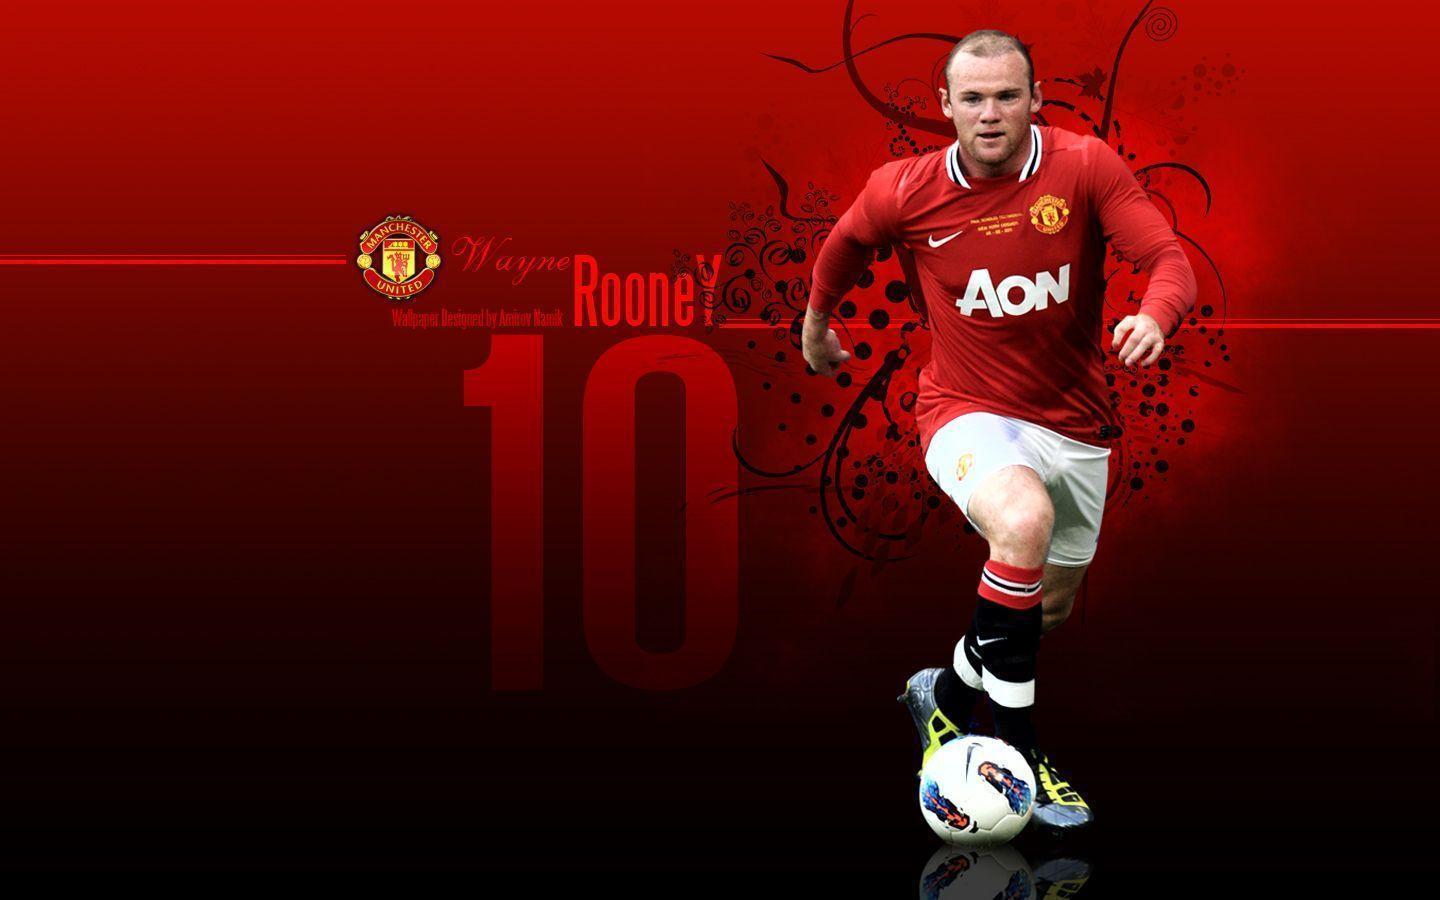 Wayne Rooney HD Wallpaper